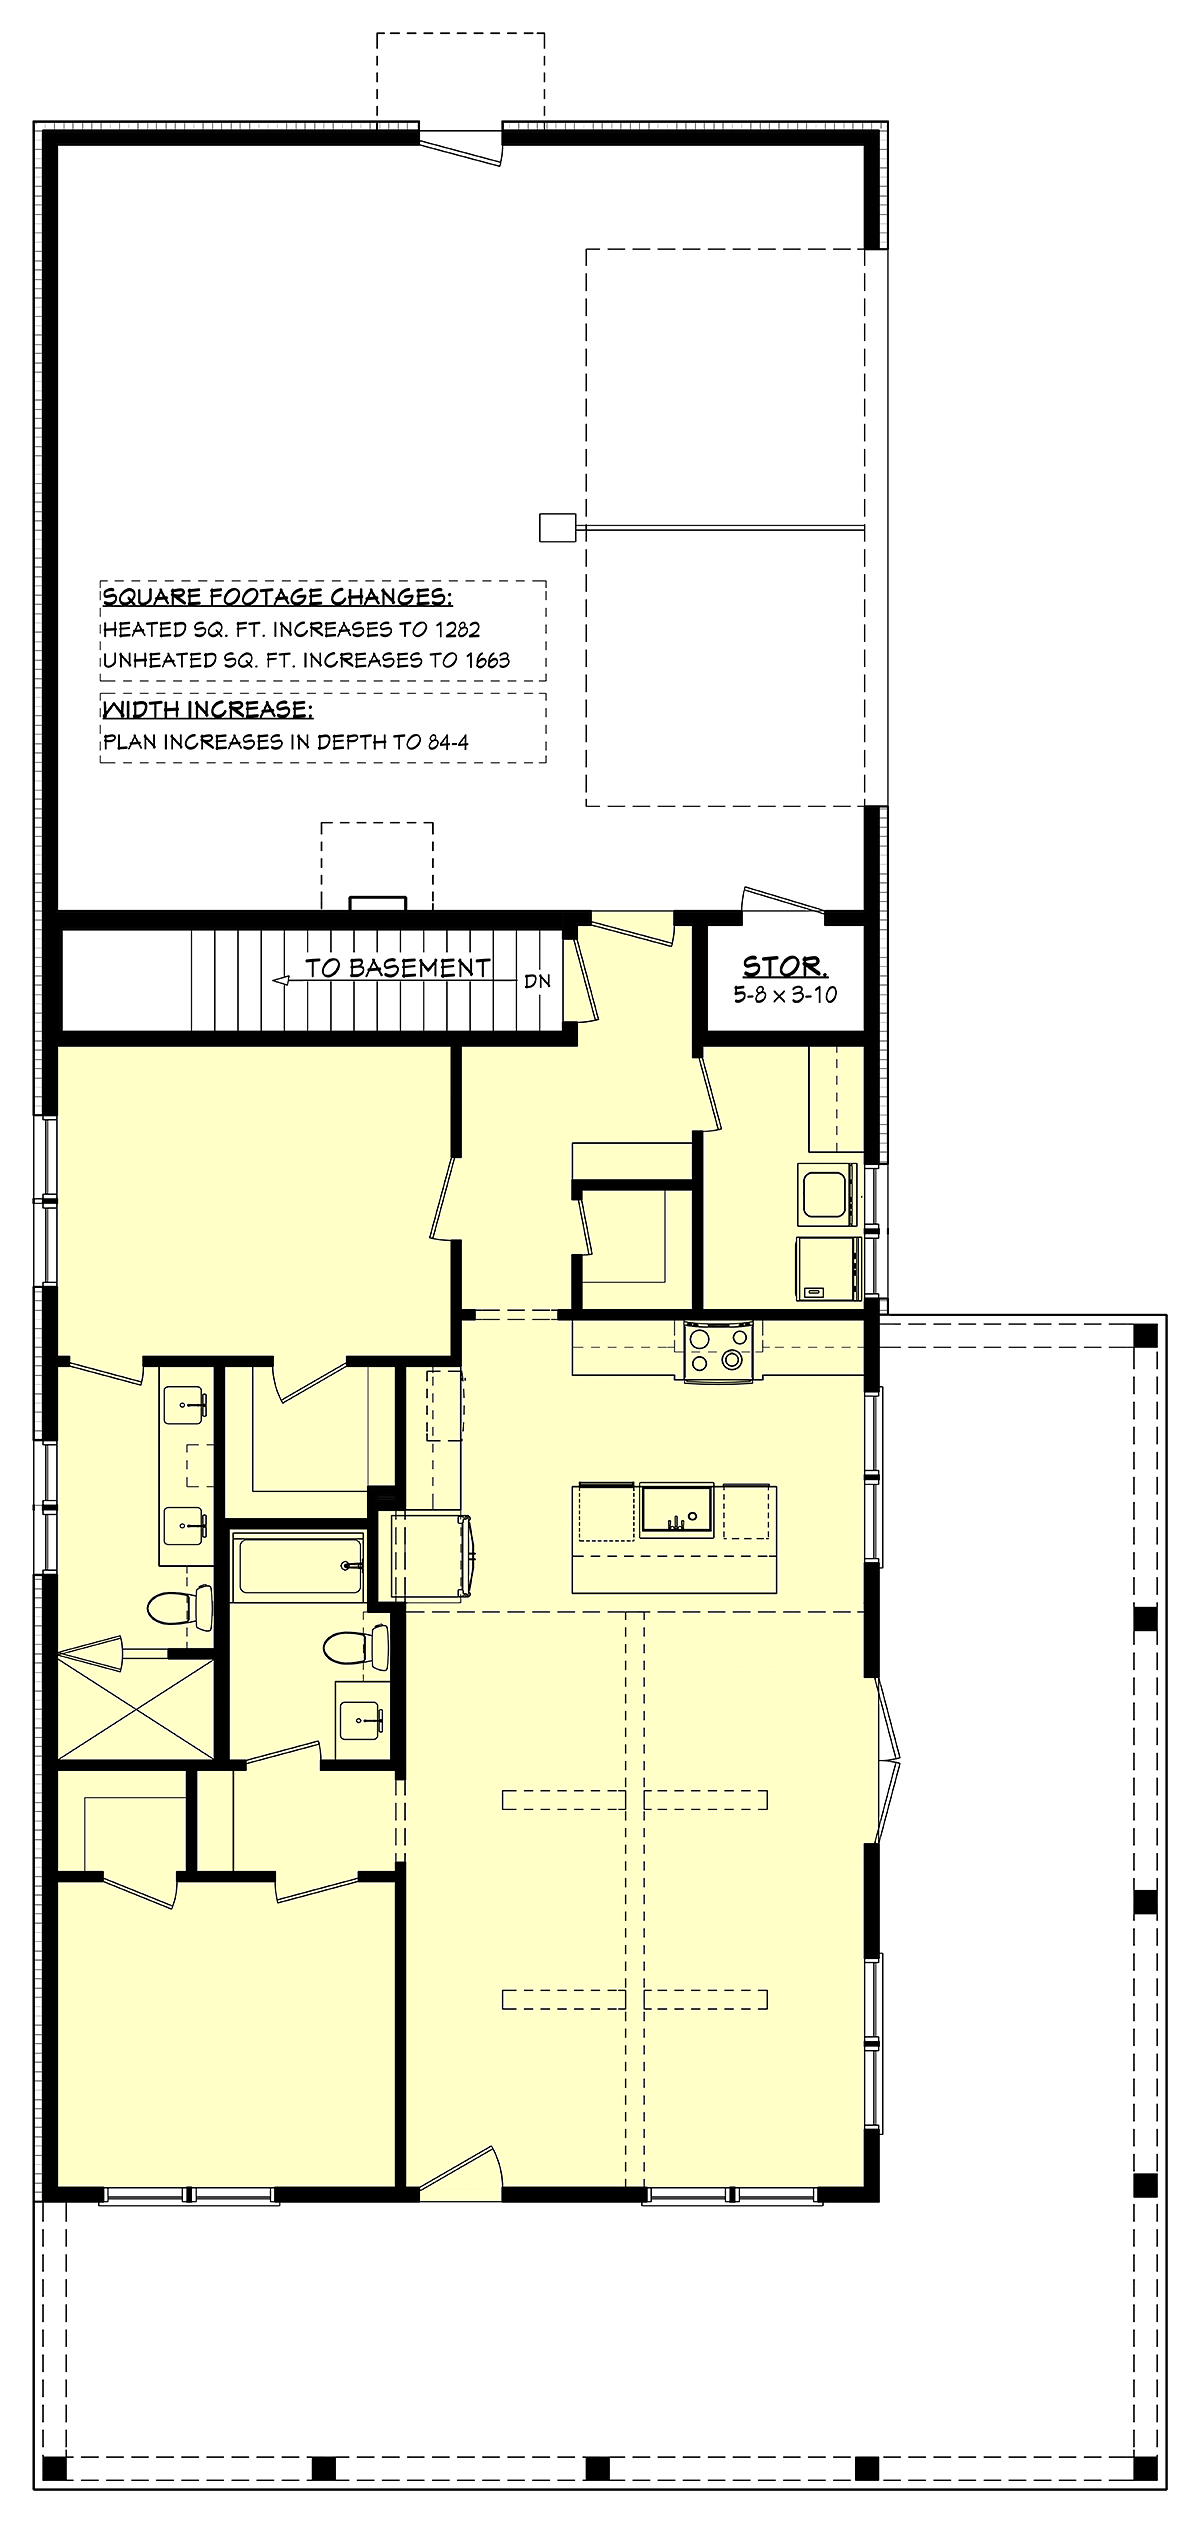 House Plan 82920 Alternate Level One